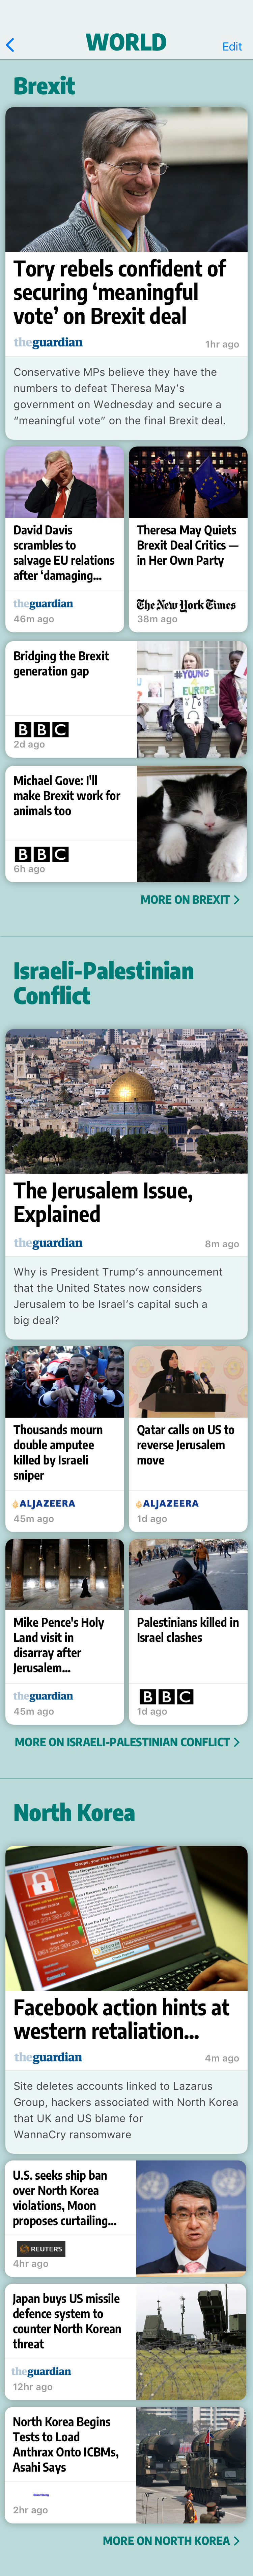 Screenshot: A page of world news